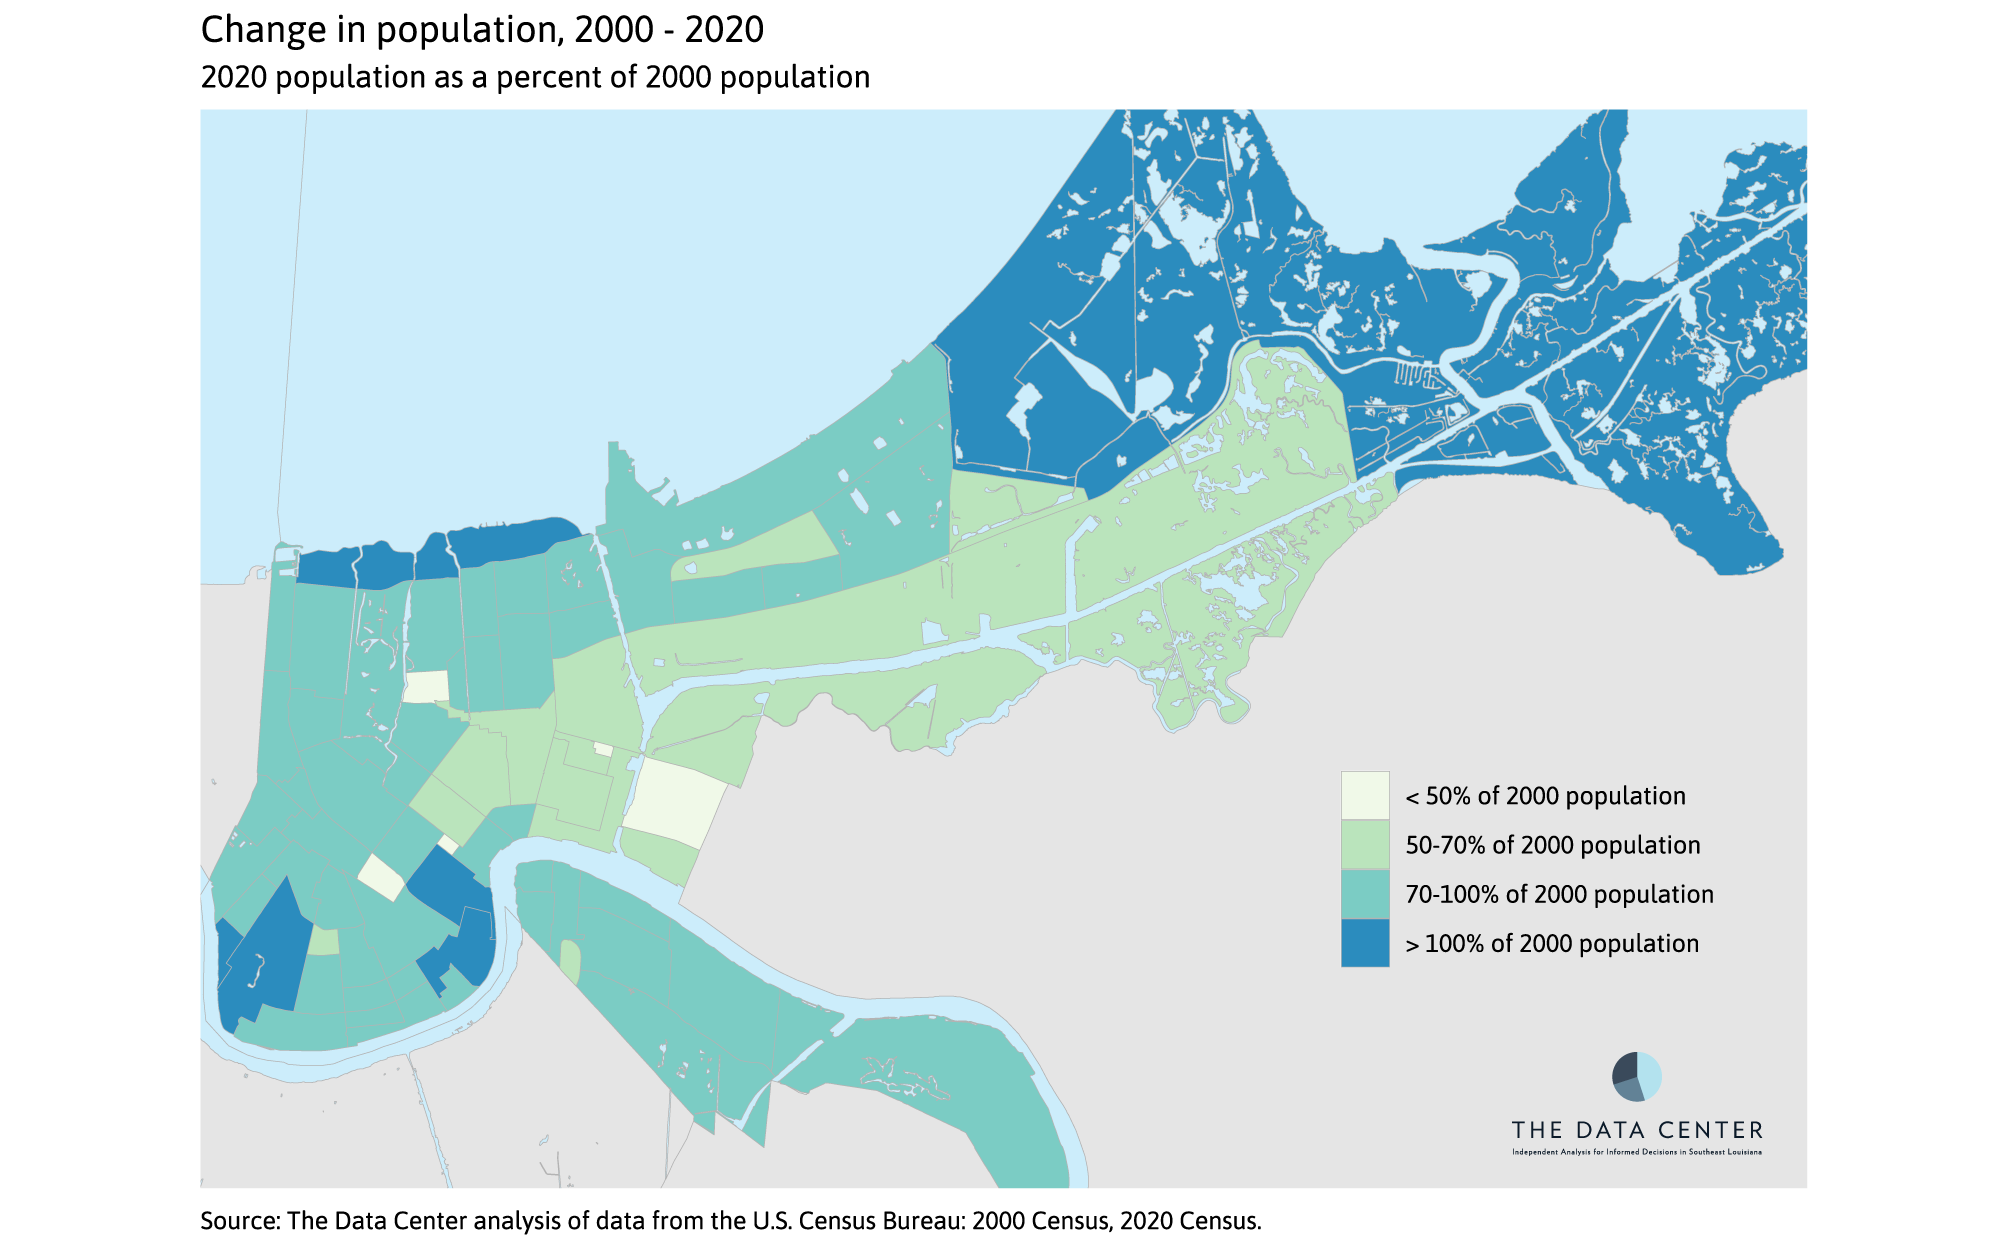 Percent Change, 2000 to 2020